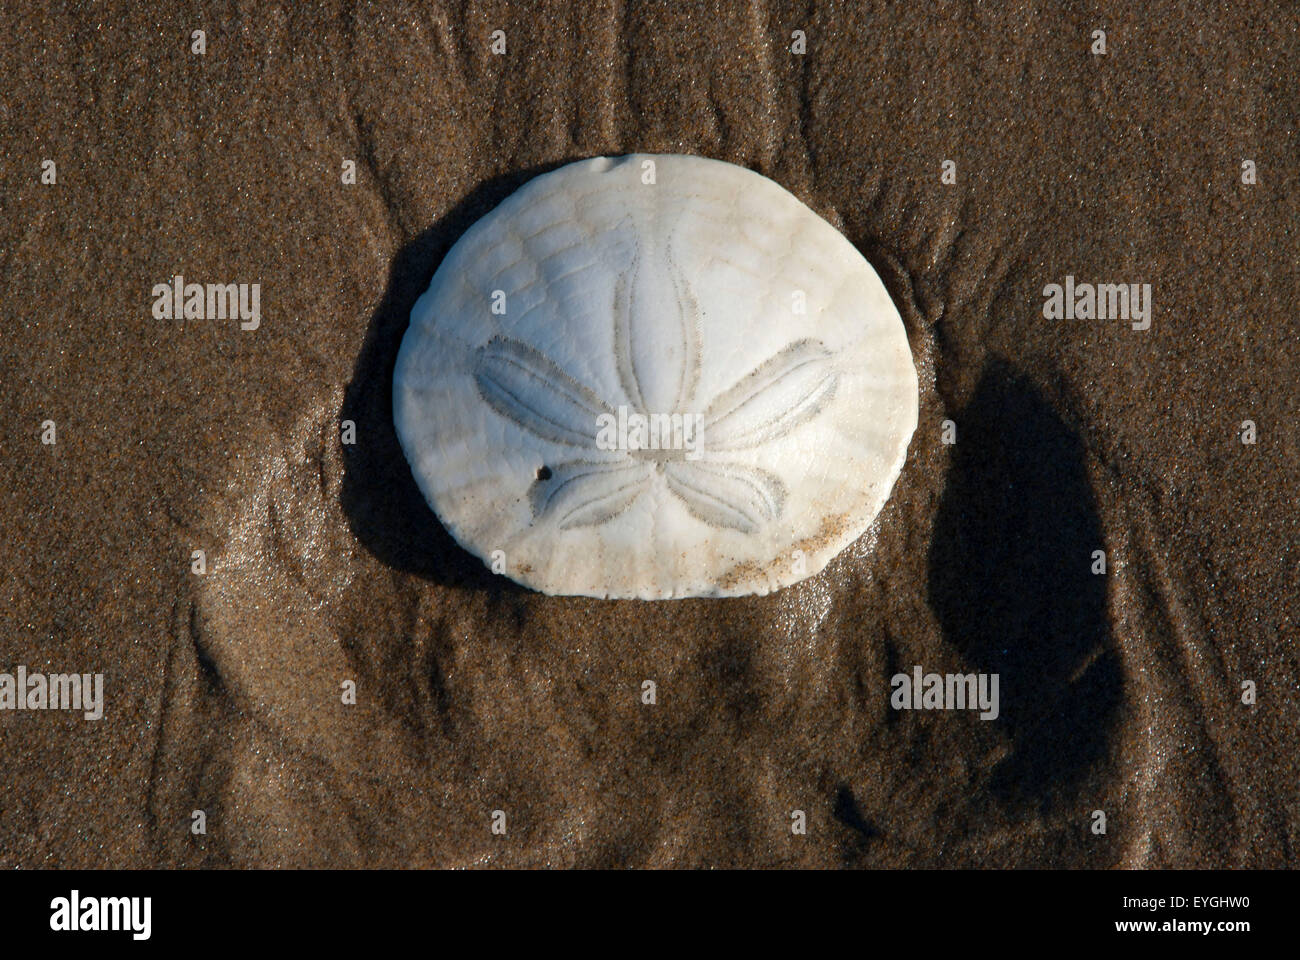 Sand dollar, Bayocean Peninsula, Oregon Stock Photo